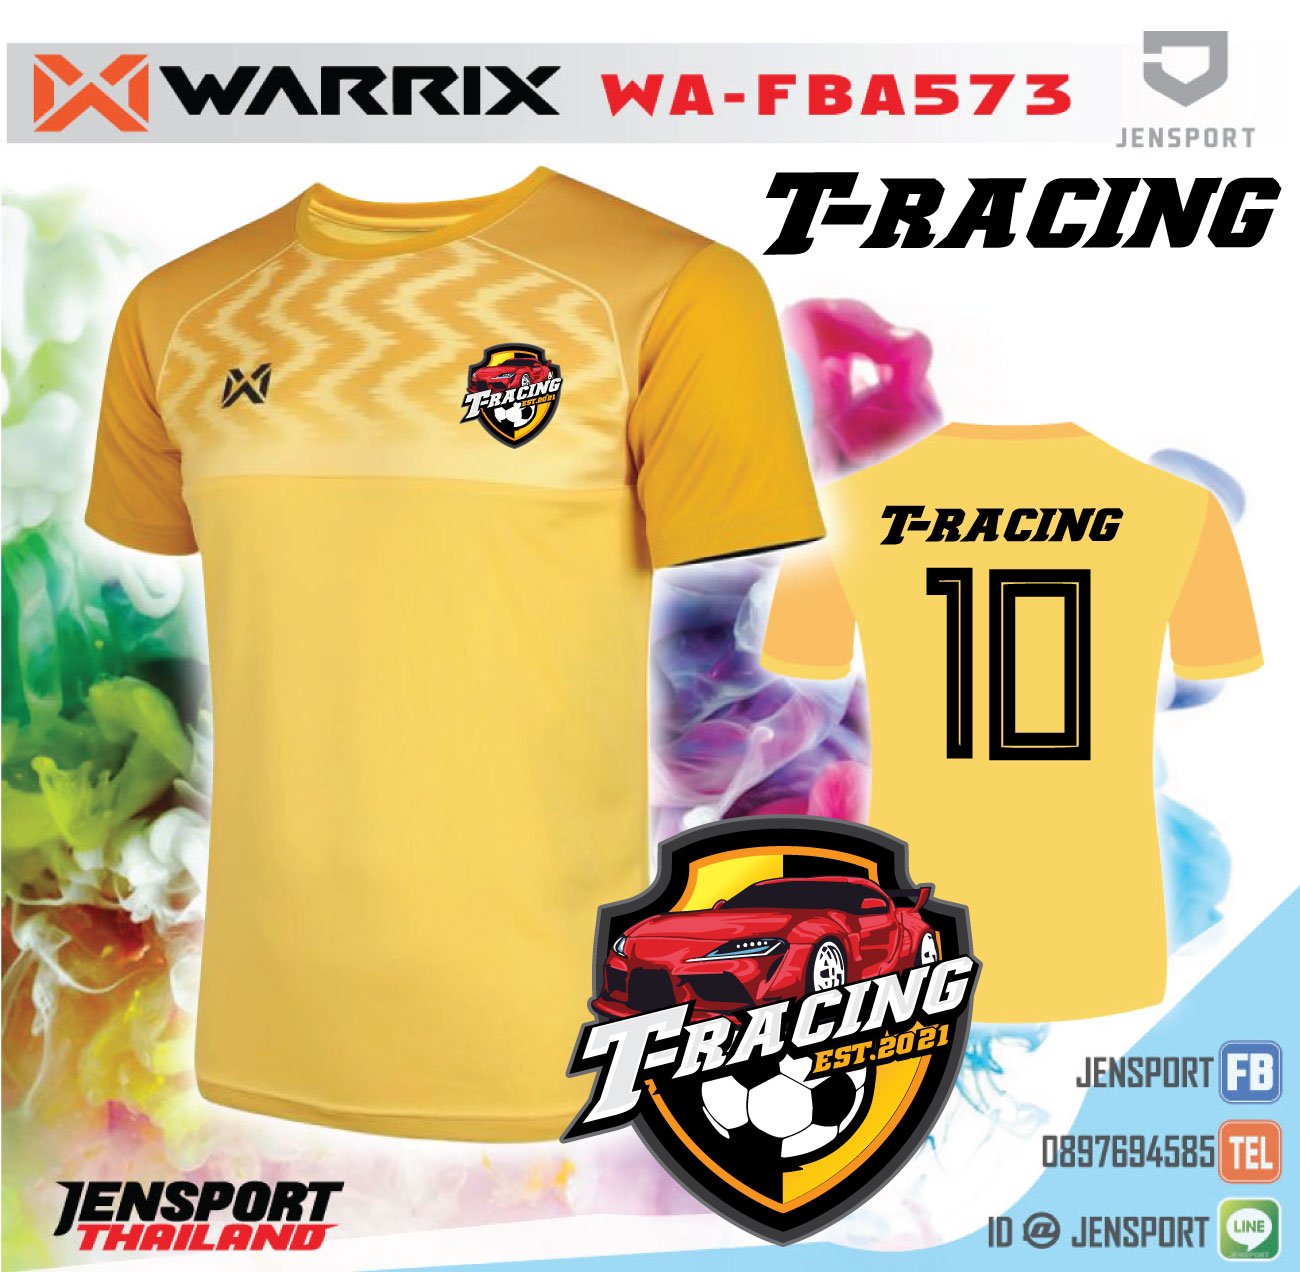 Warrix WA-FBA573 T-RACING